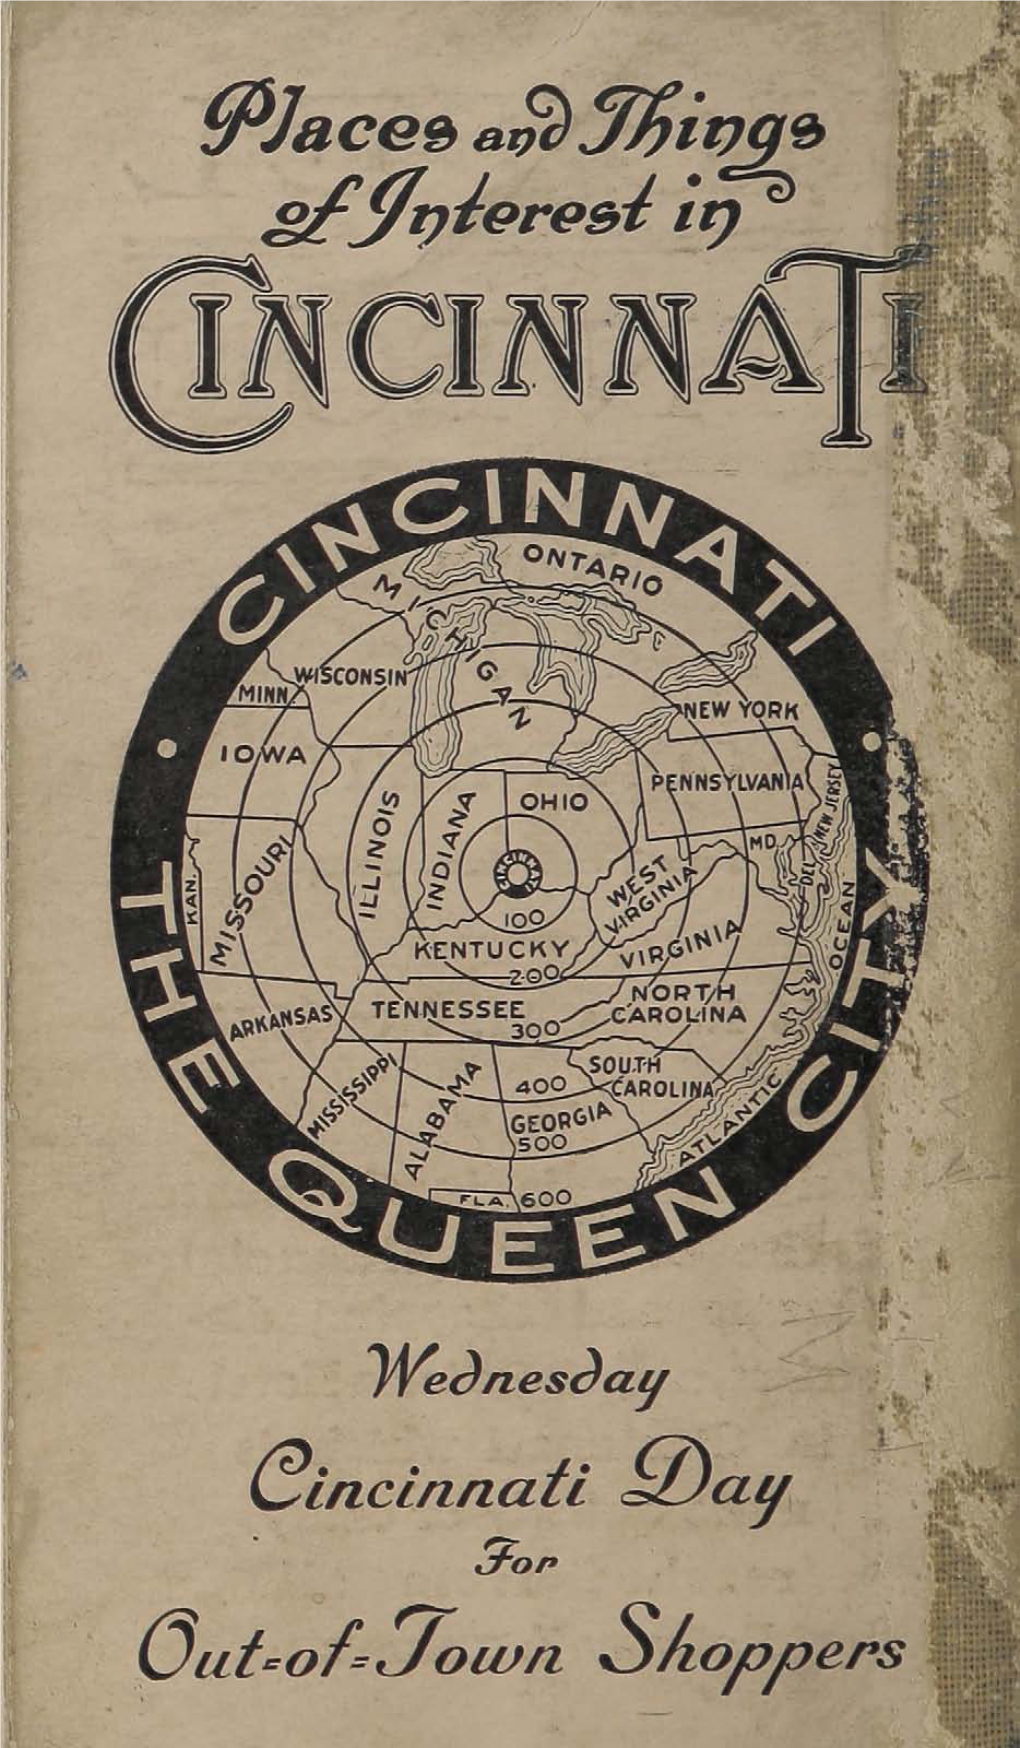 Cincinnati Digital Library